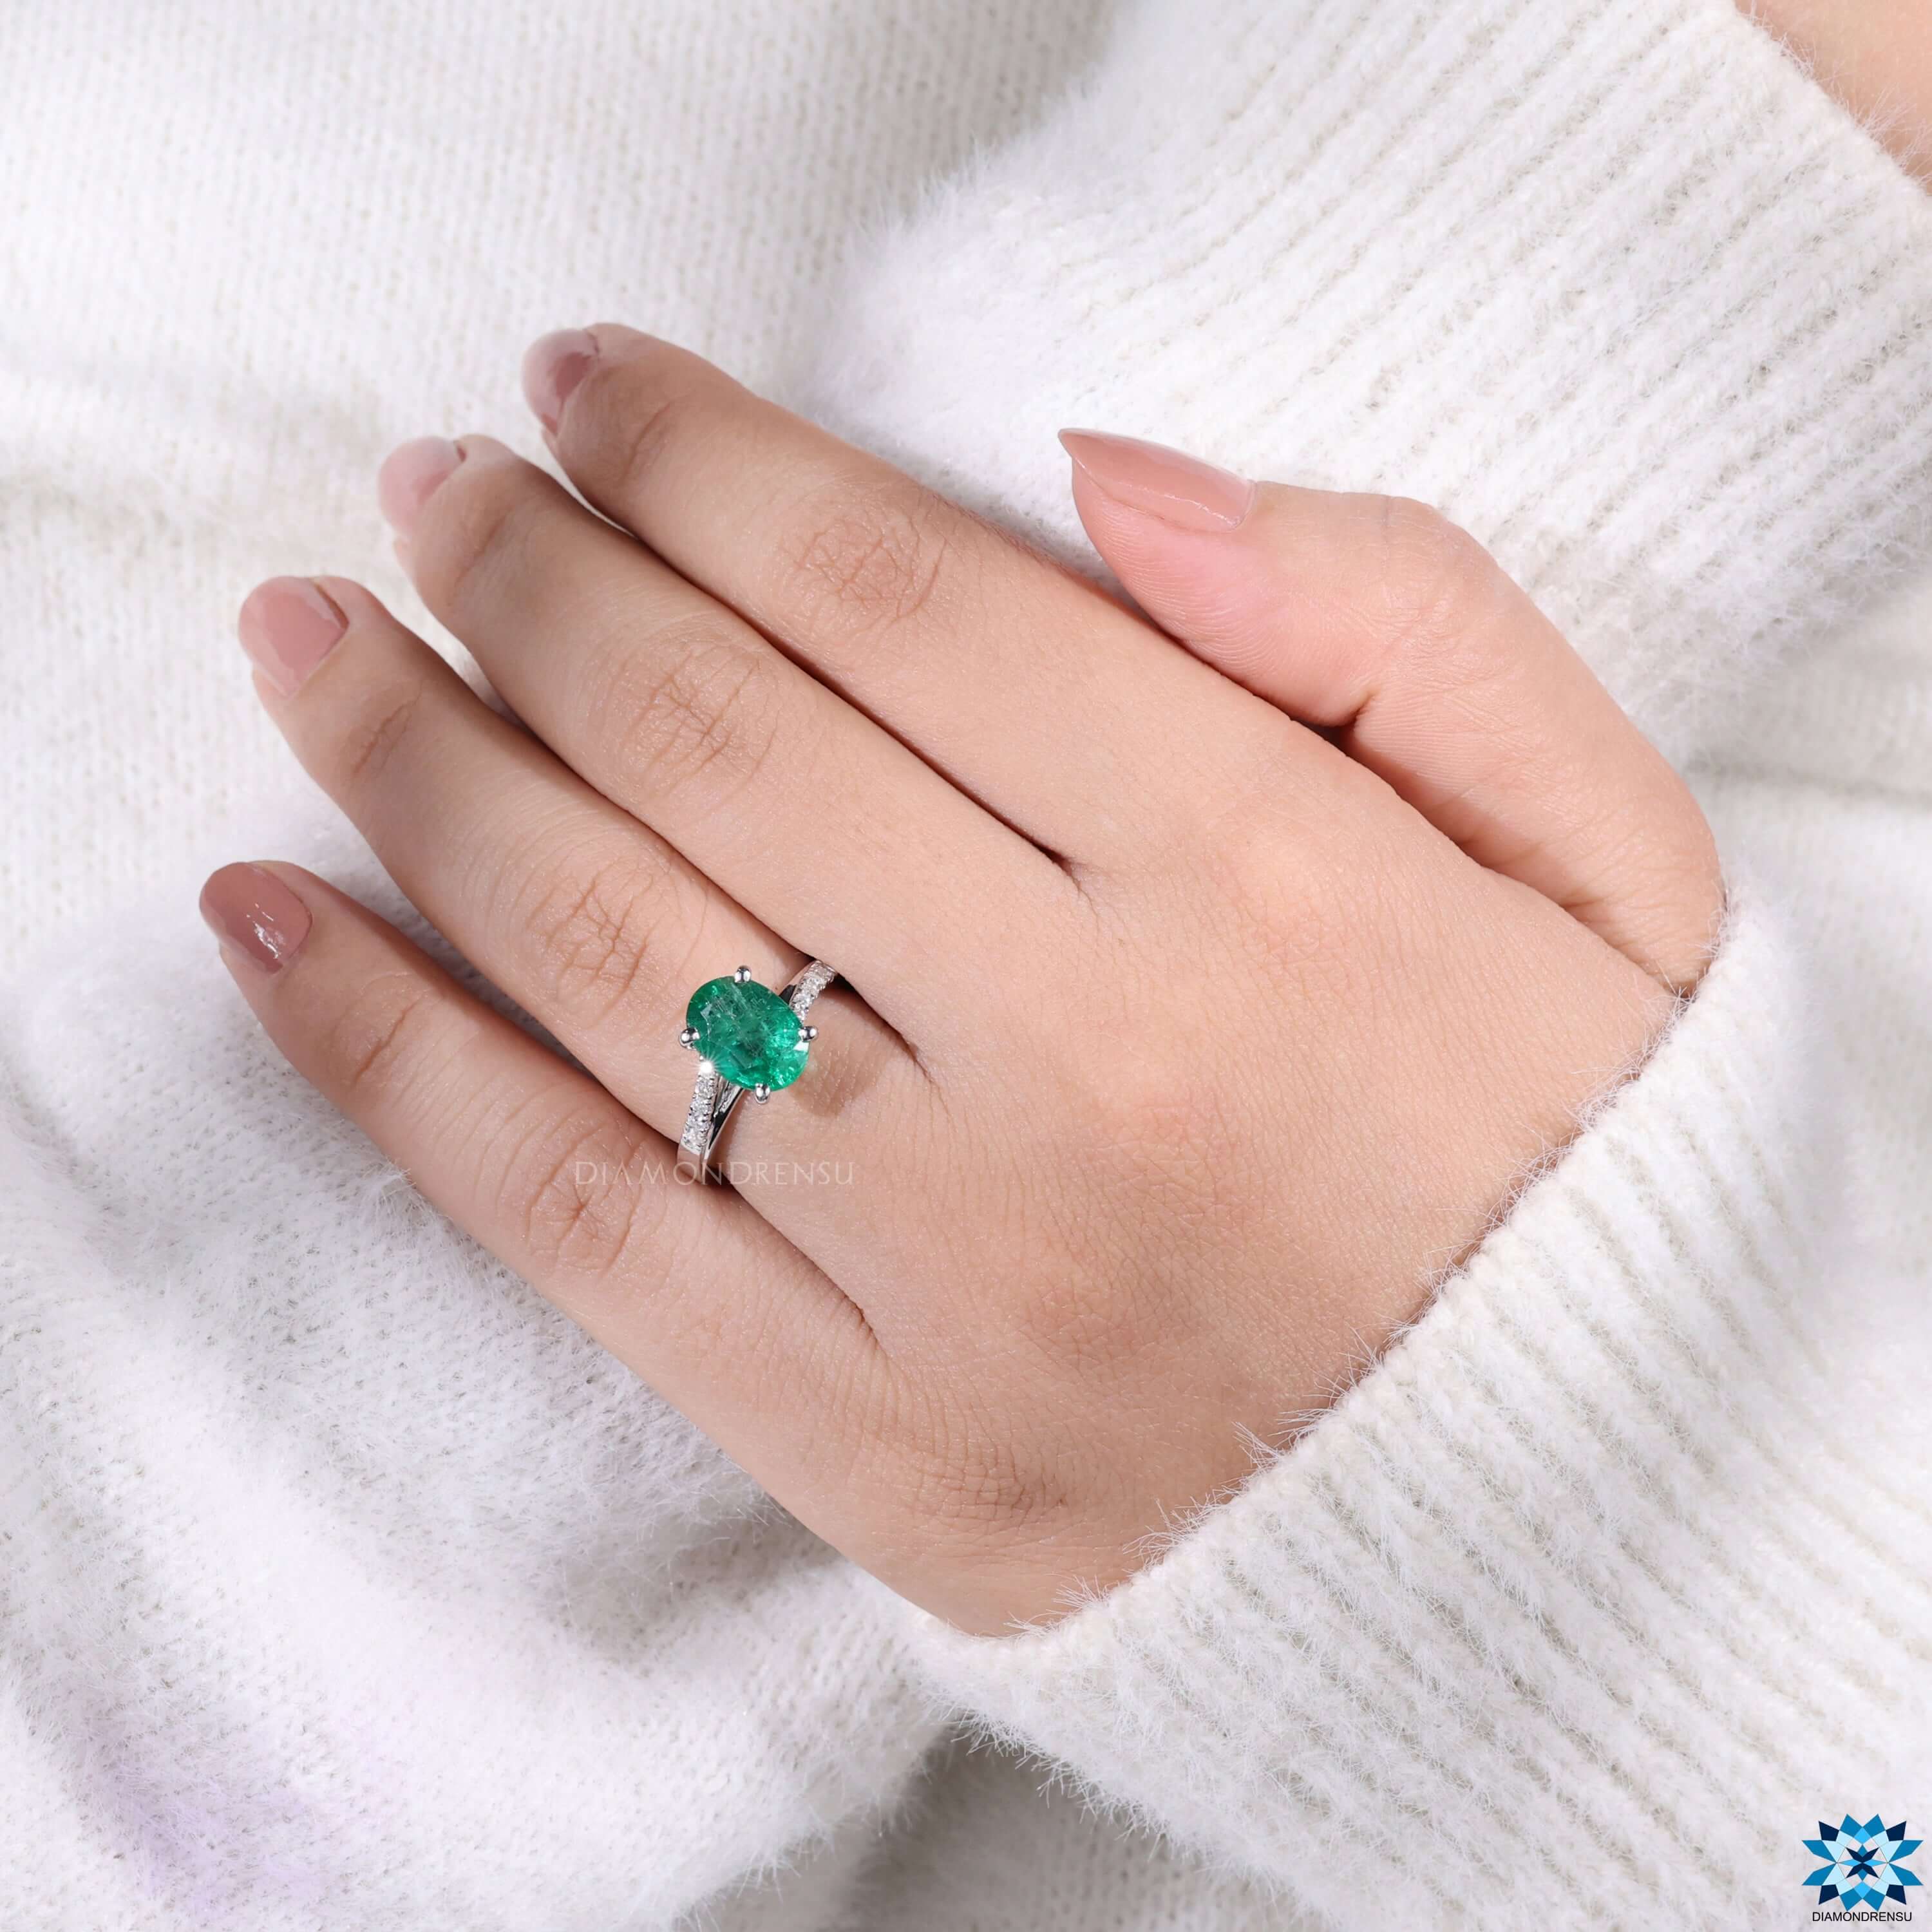 Why aren't gemstone engagement rings more popular? : r/EngagementRings